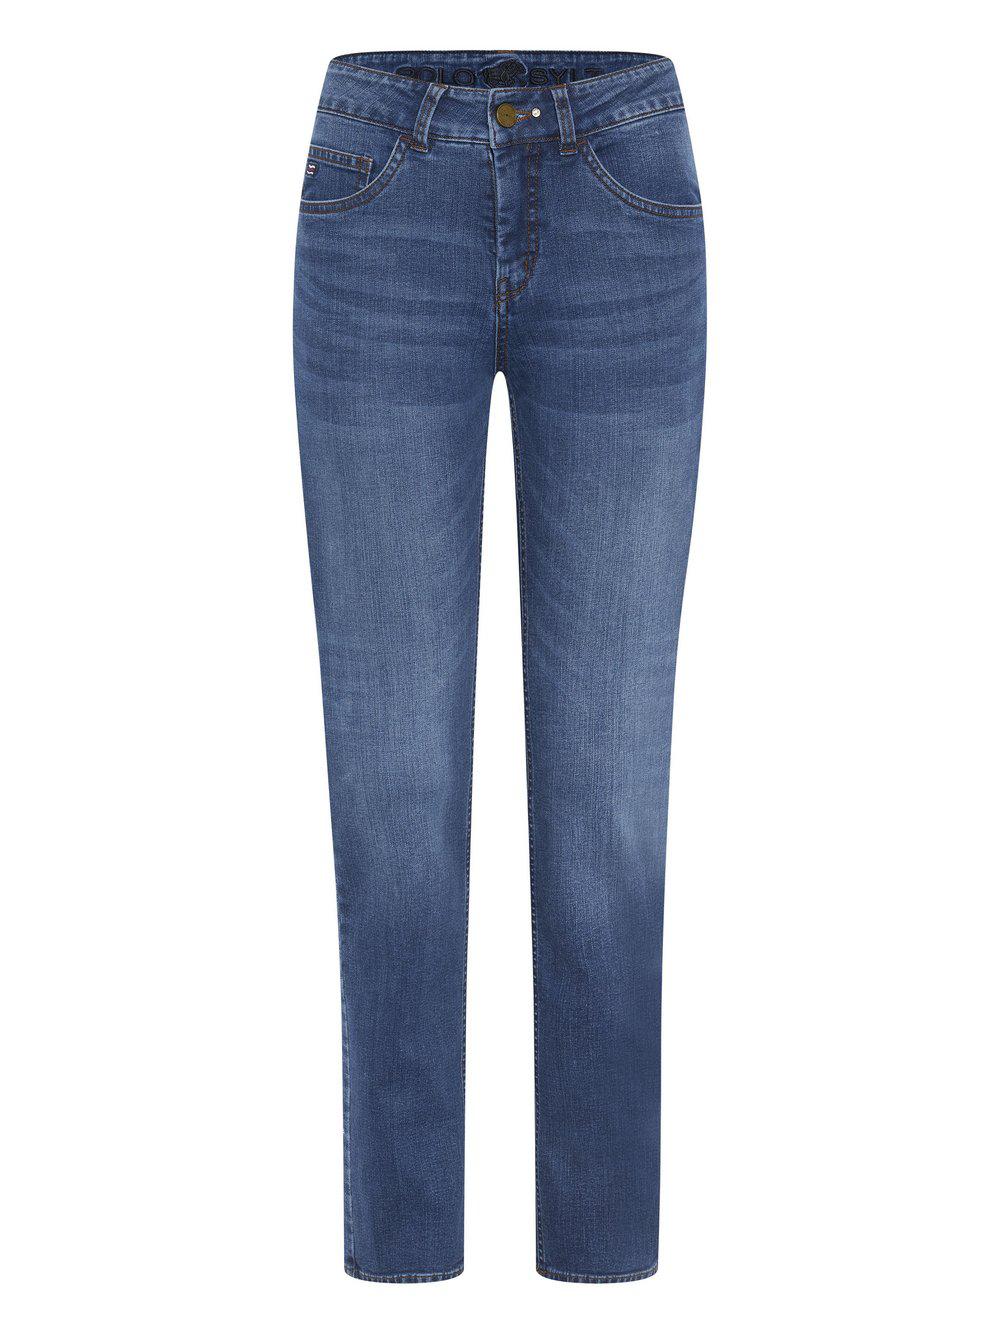 Polo Sylt Jeans Damen Baumwolle, medium stone von POLO SYLT